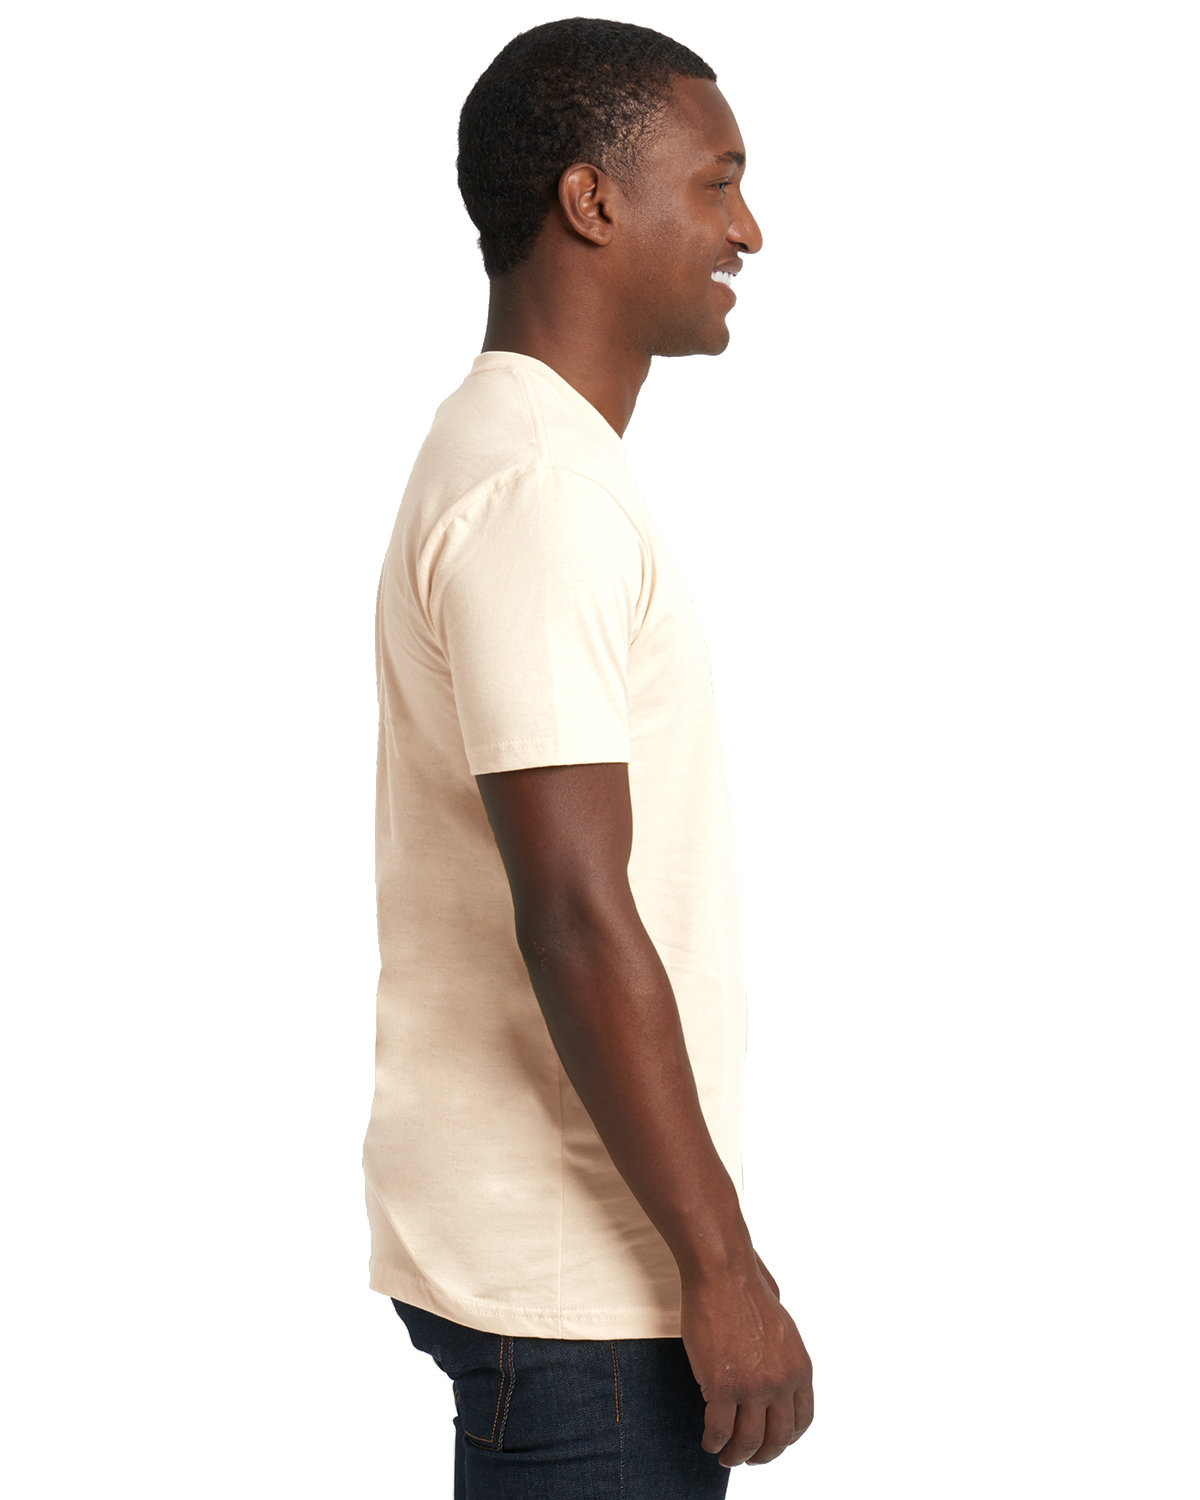 Next Level Apparel Unisex Cotton T-Shirt | alphabroder Canada